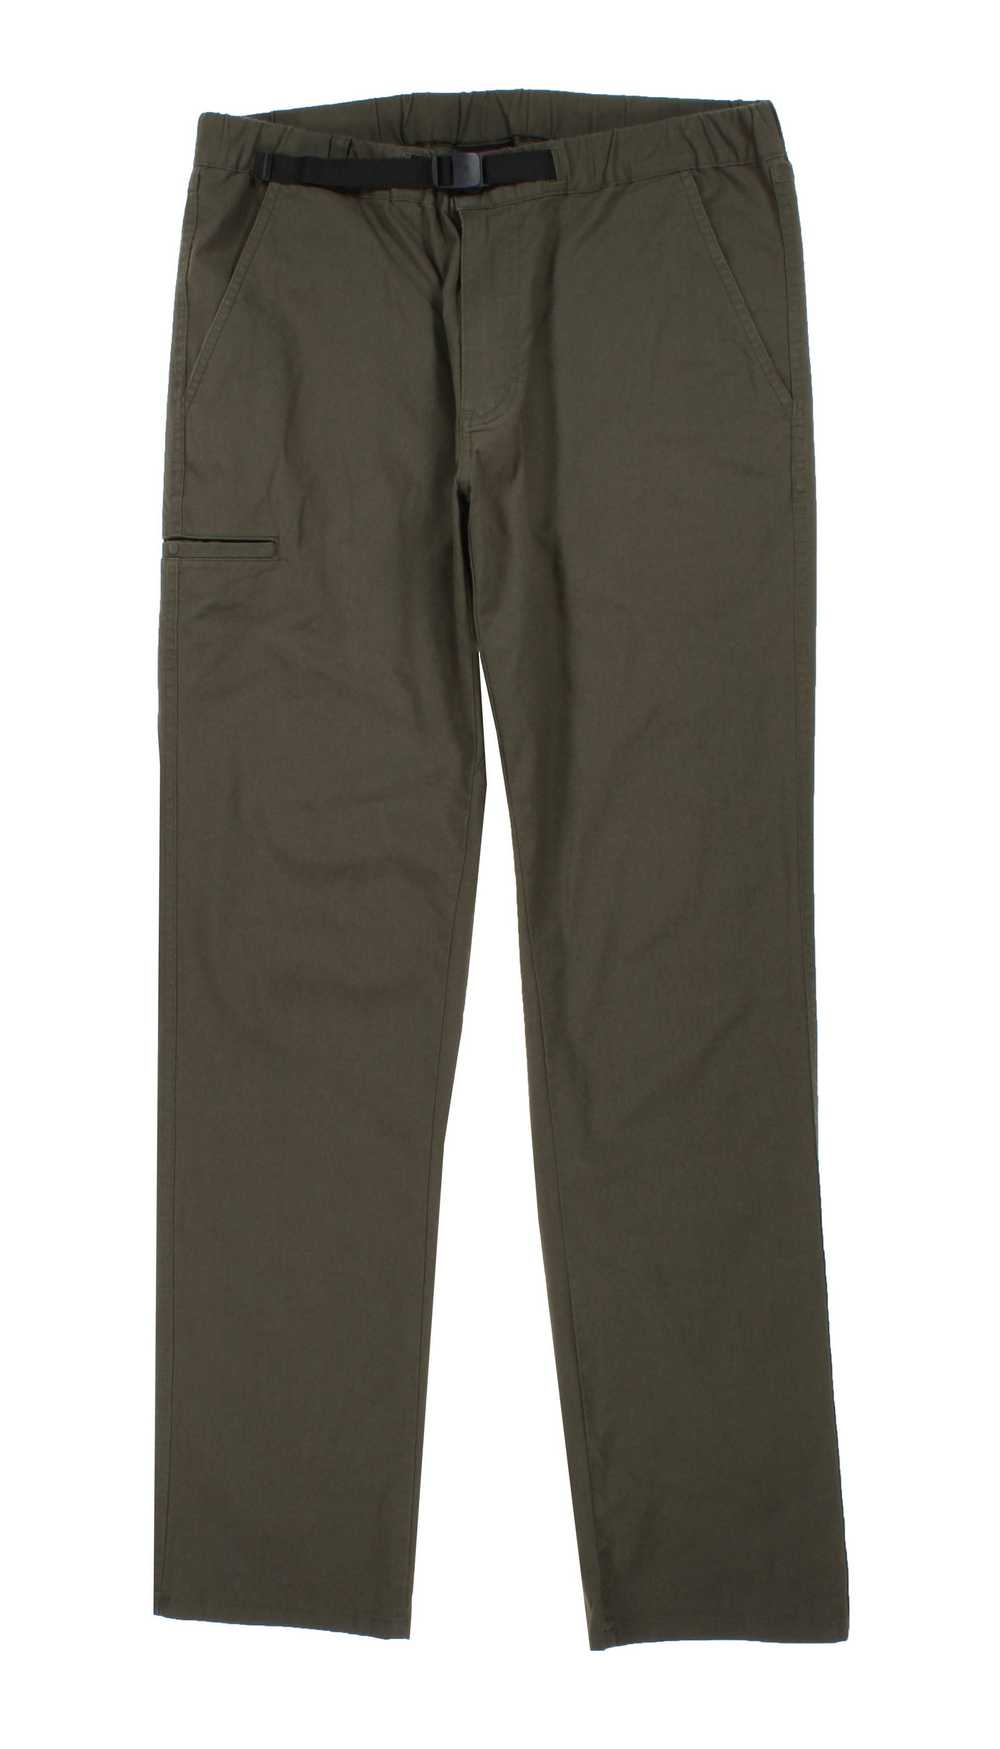 Patagonia - M's Lightweight Cotton Gi III Pants - image 1